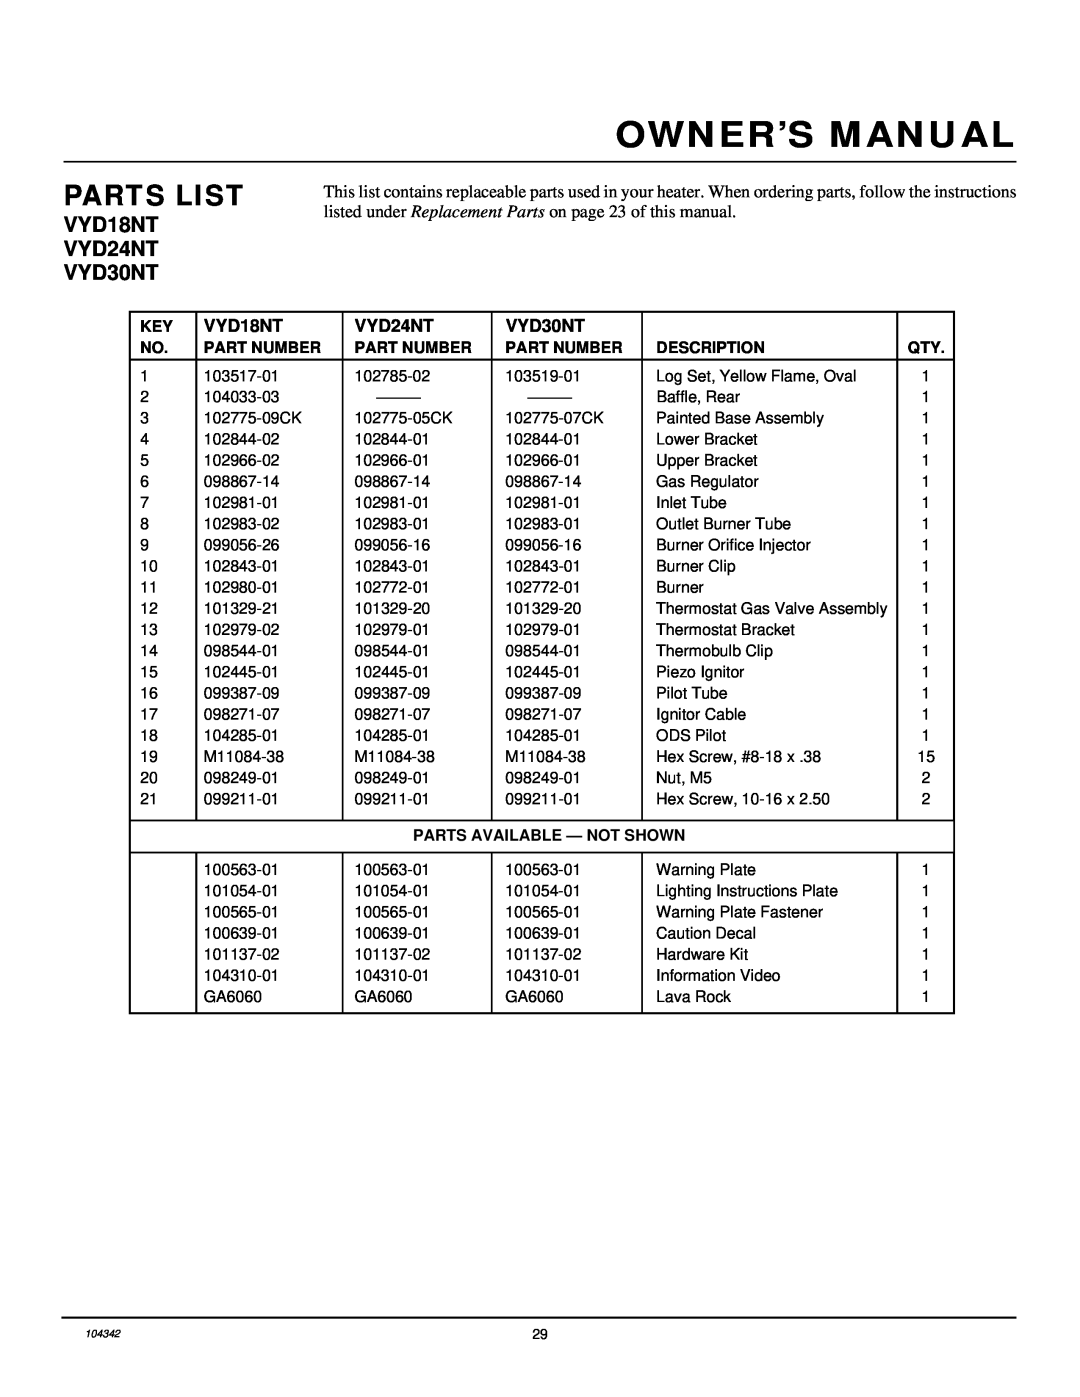 Desa GAS LOG HEATER VYD18NT VYD24NT VYD30NT, Parts List, Part Number, Description, Parts Available - Not Shown 